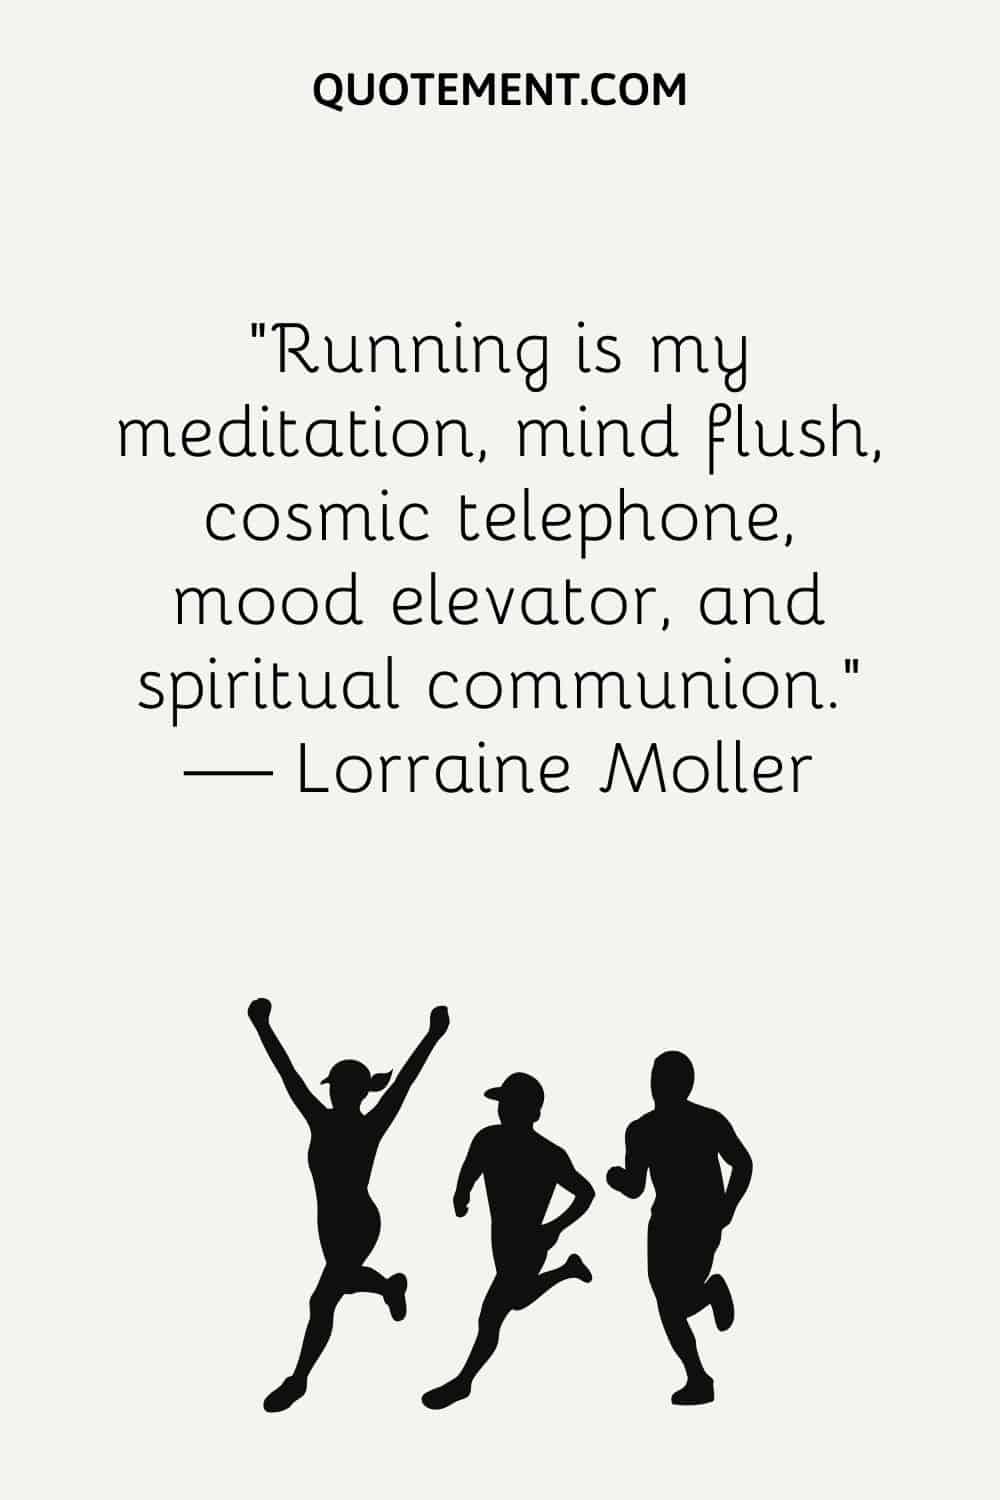 Running is my meditation, mind flush, cosmic telephone, mood elevator, and spiritual communion